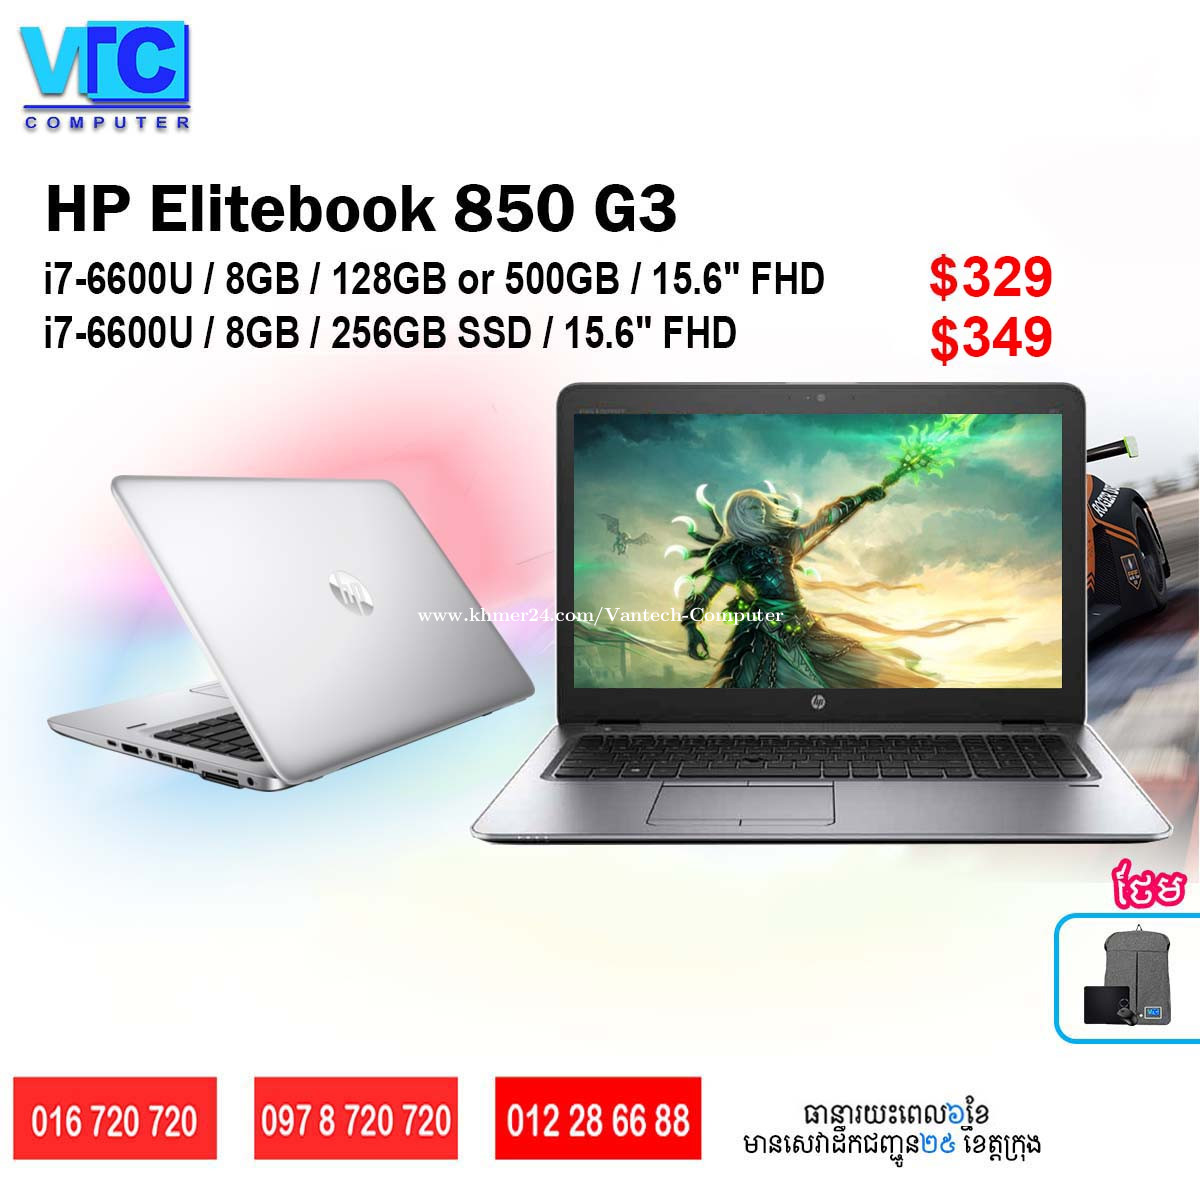 HP Elitebook 840 G3 Price $279.00 in Mittakpheap, Cambodia